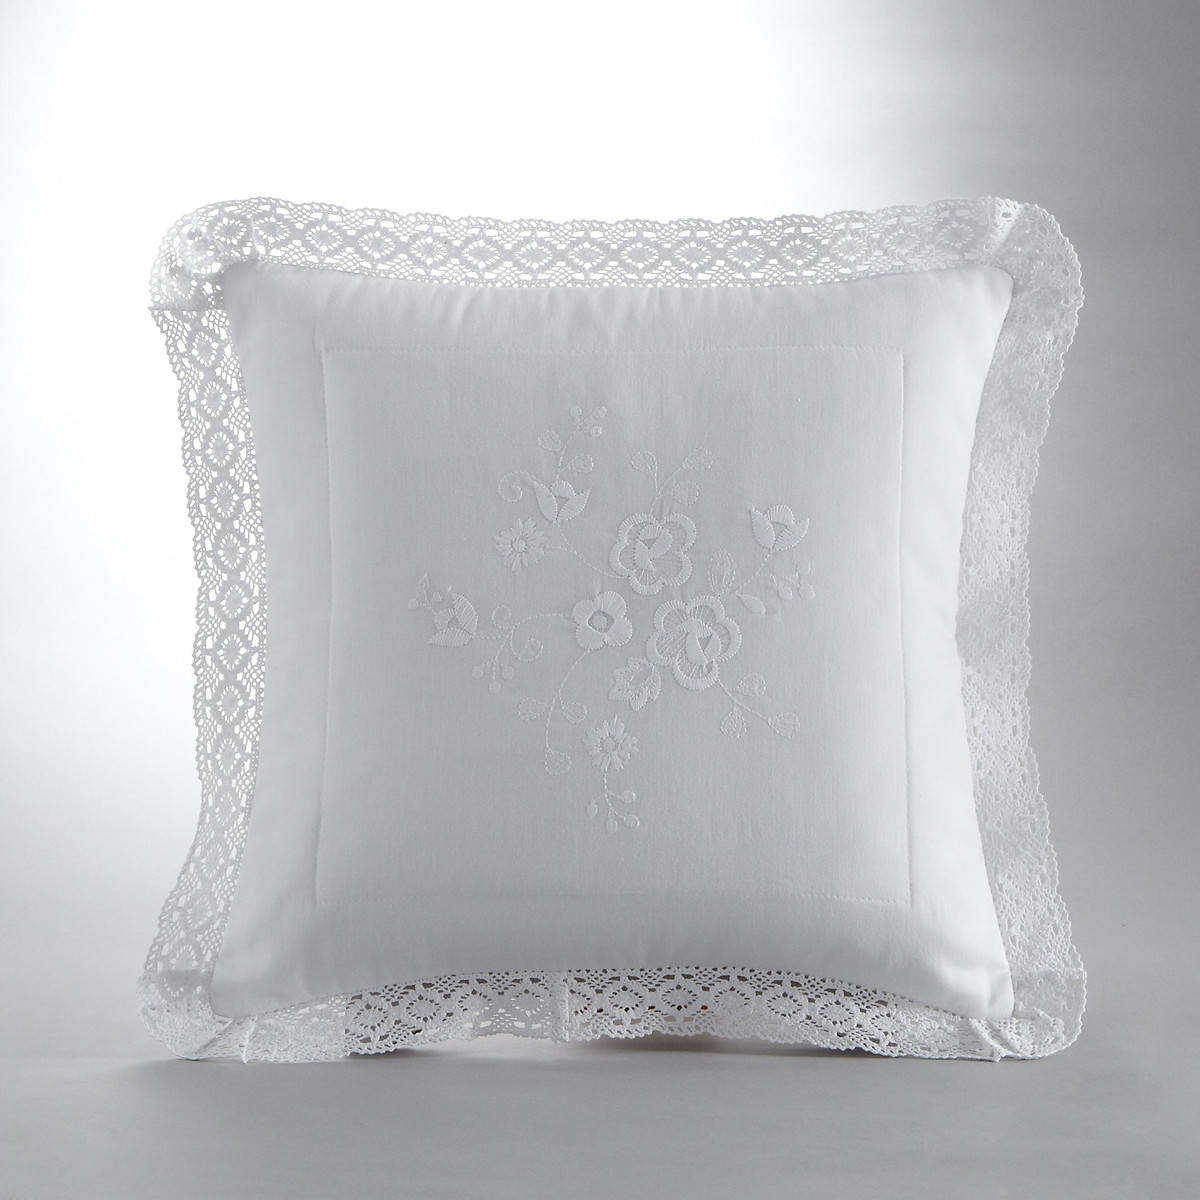 Чехол La Redoute На подушку-валик или на подушку OYENA 40 x 40 см белый, размер 40 x 40 см - фото 3